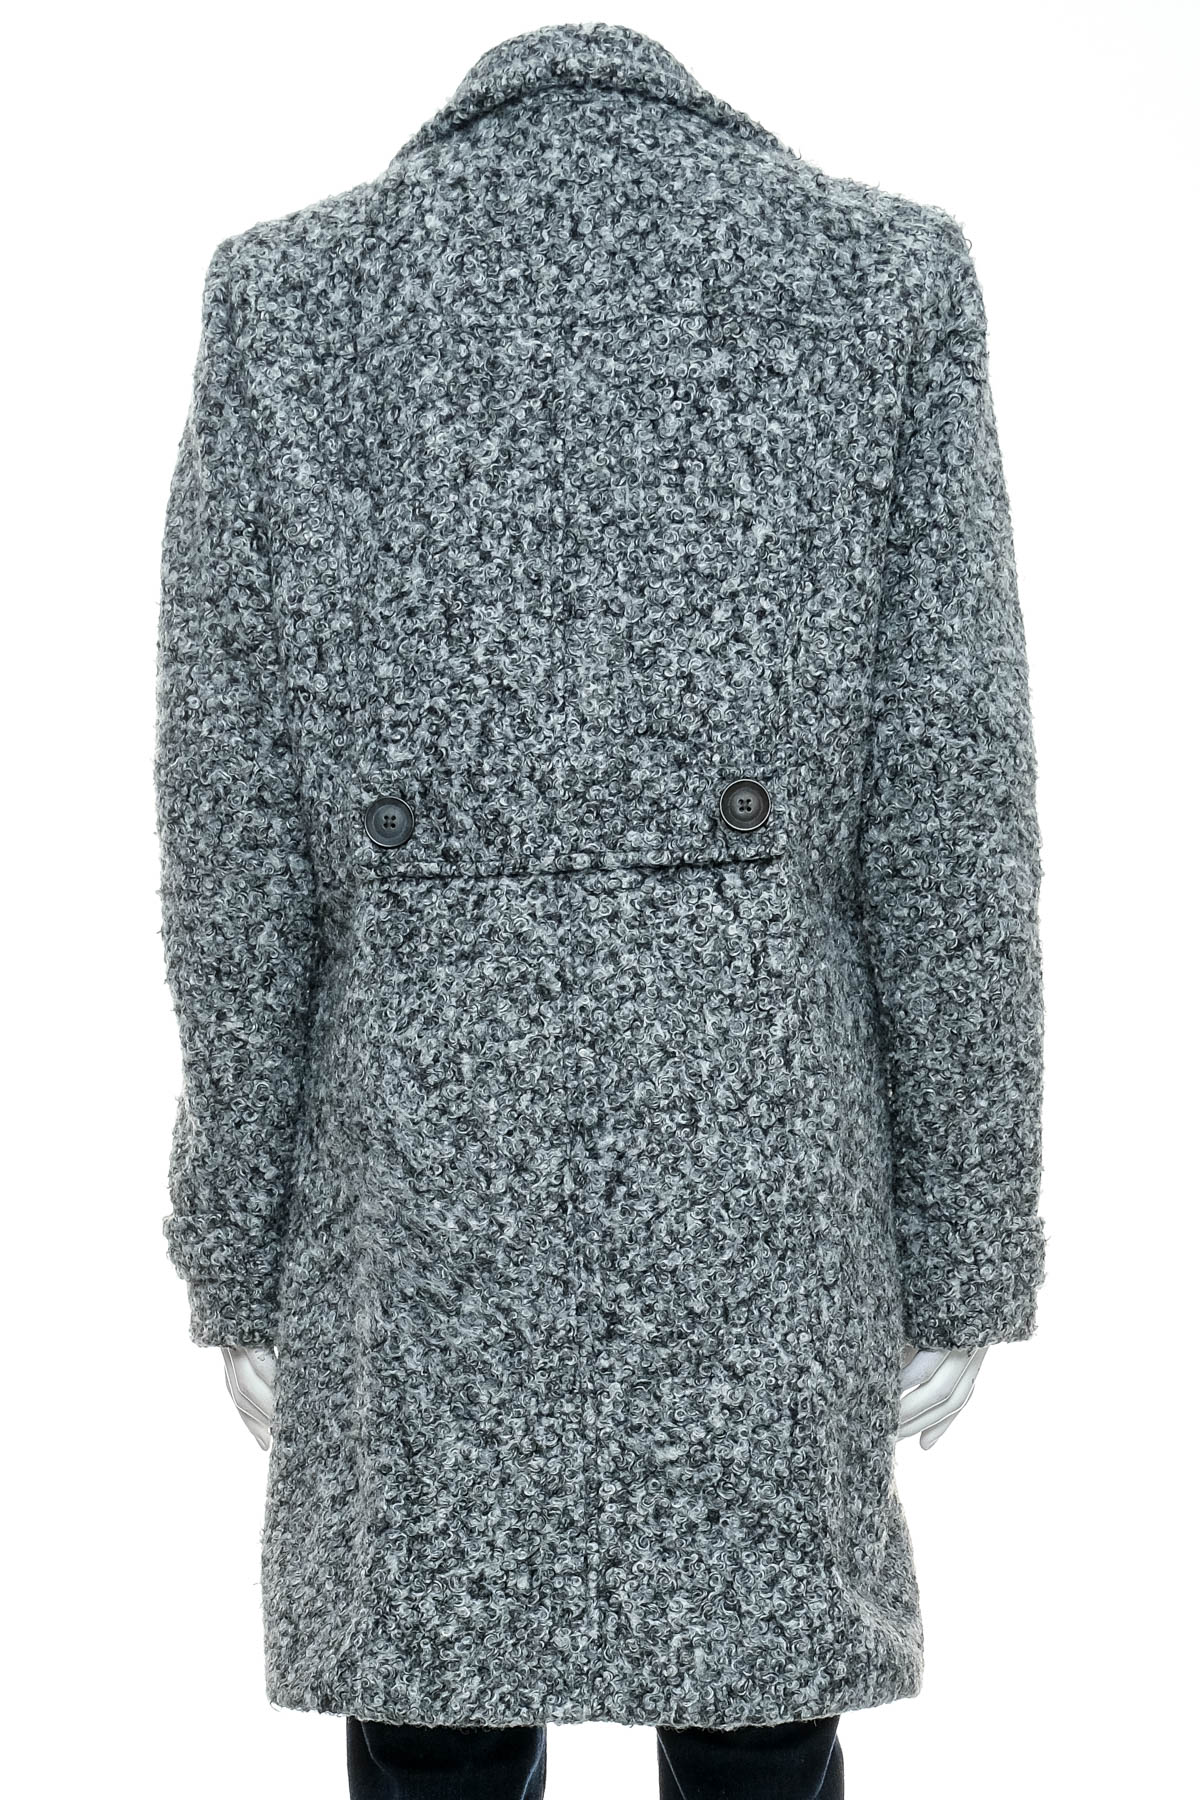 Women's coat - Jean Pascale - 1